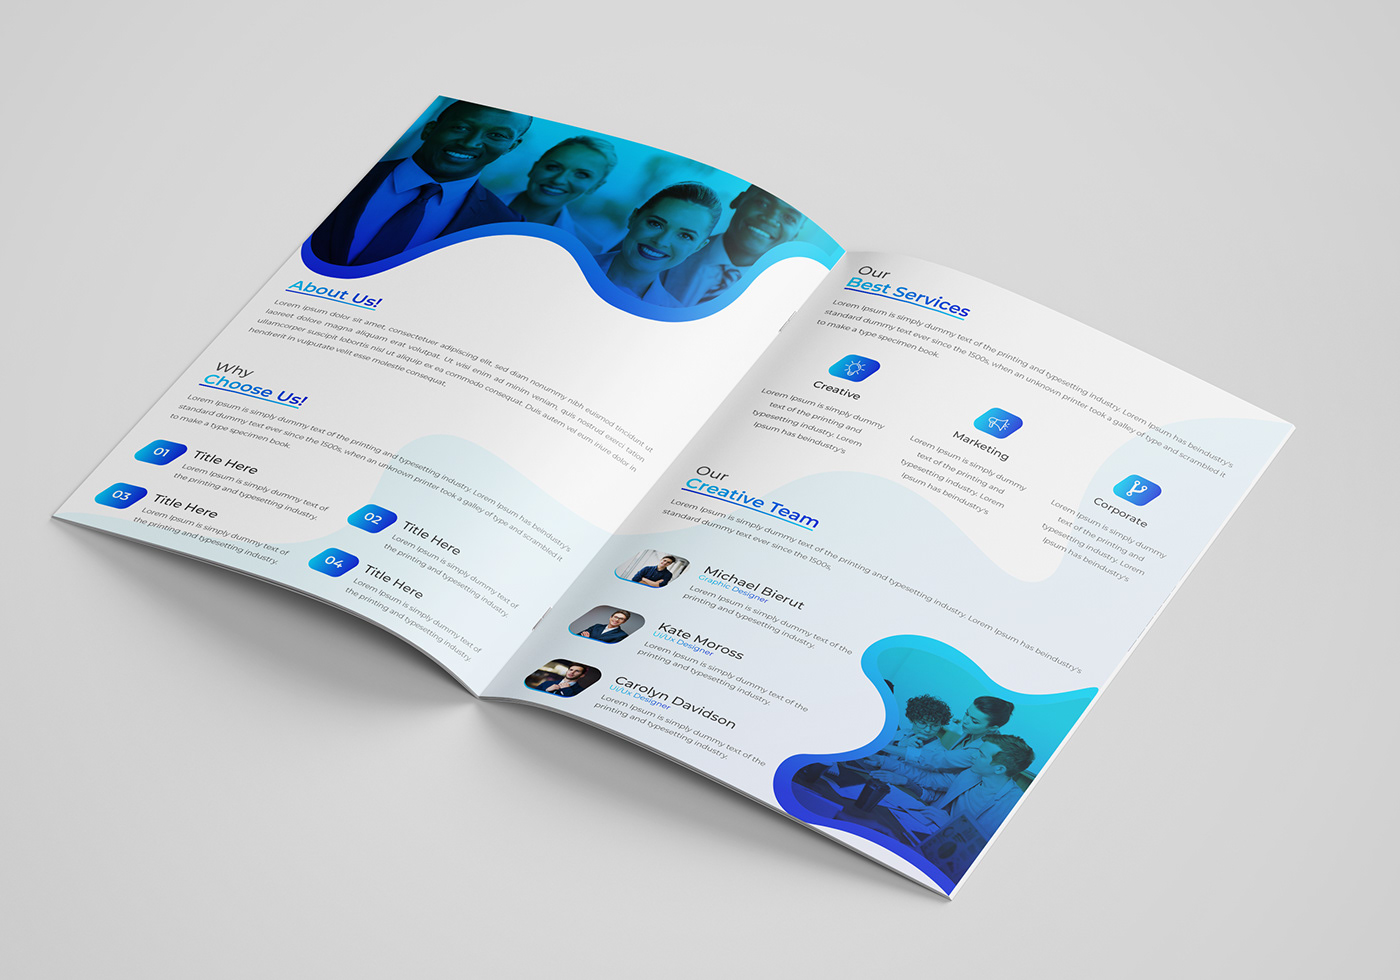 bi-fold brochure brochure Bi Fold Businesss Brochure corporate A4 brochure organic shape report template blue